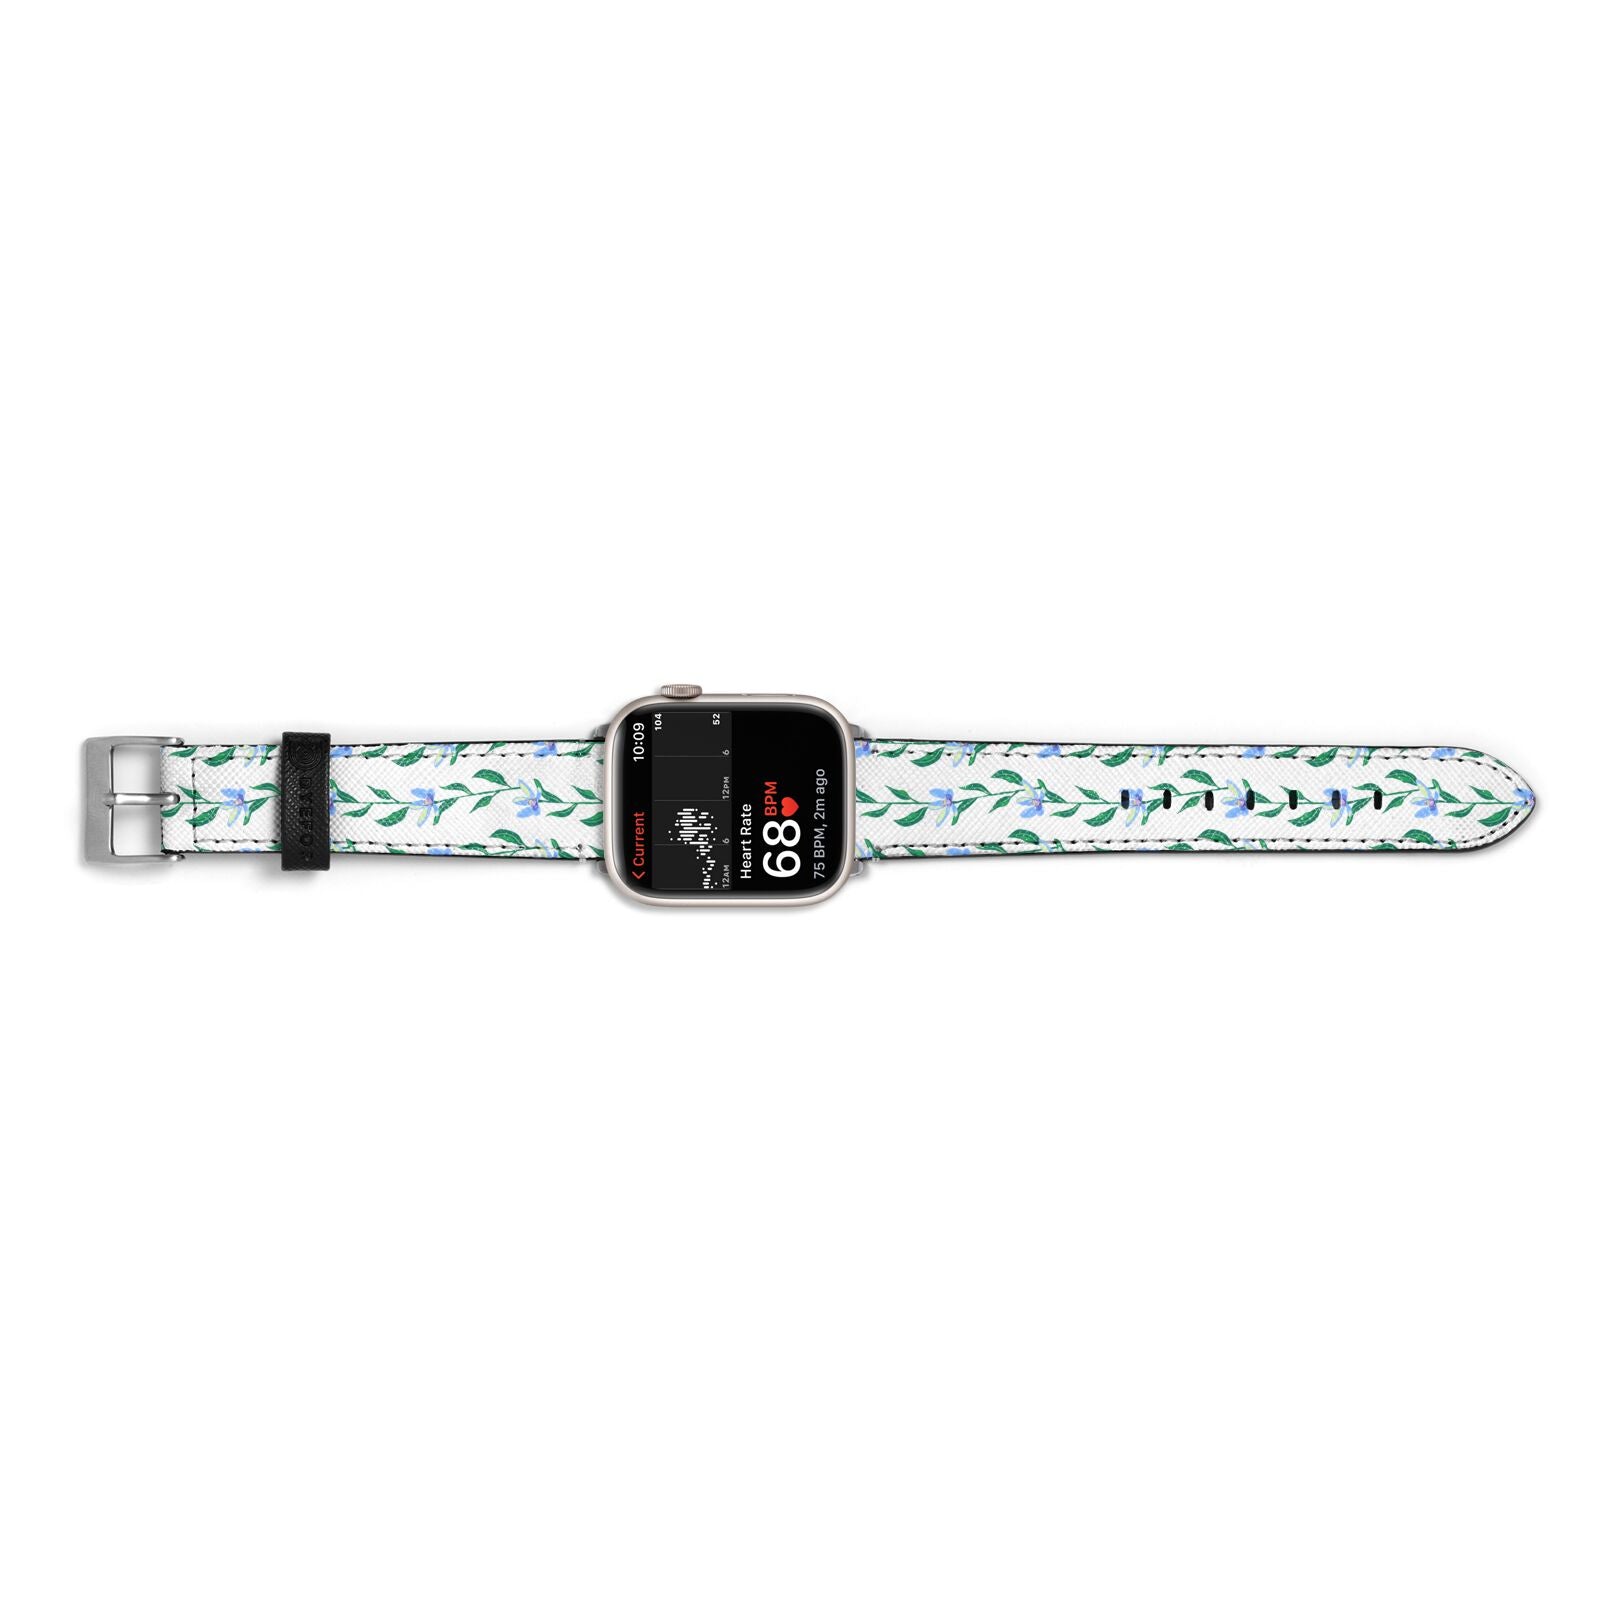 Flower Chain Apple Watch Strap Size 38mm Landscape Image Silver Hardware